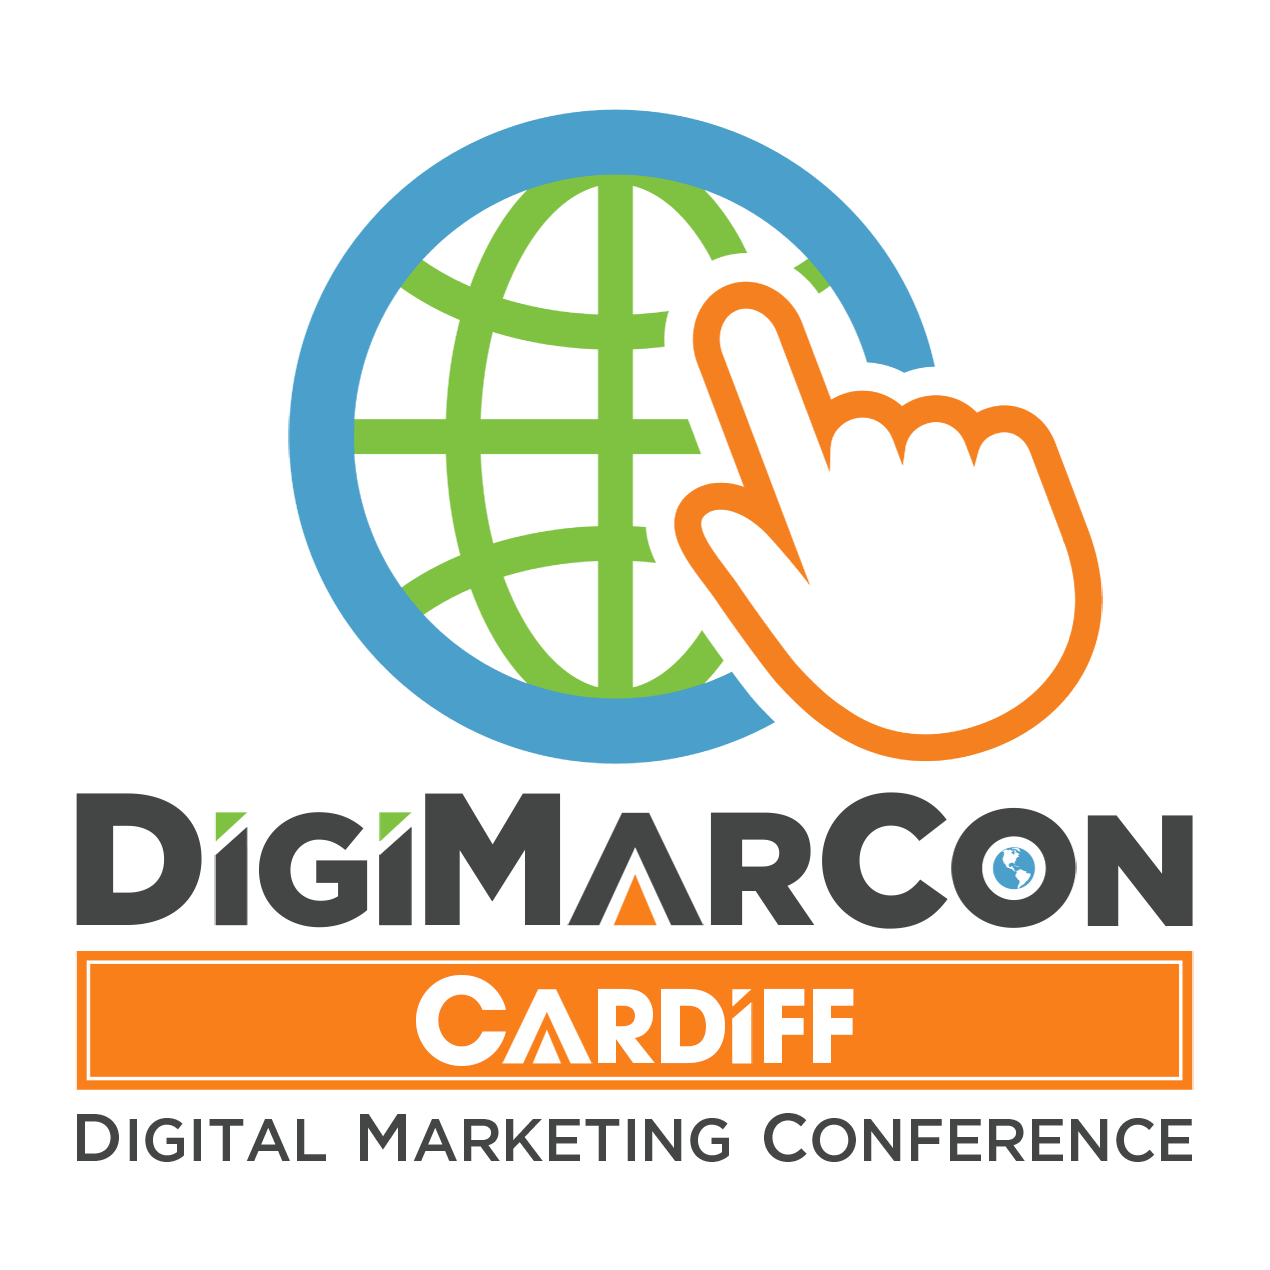 Cardiff, United Kingdom Meetup Events